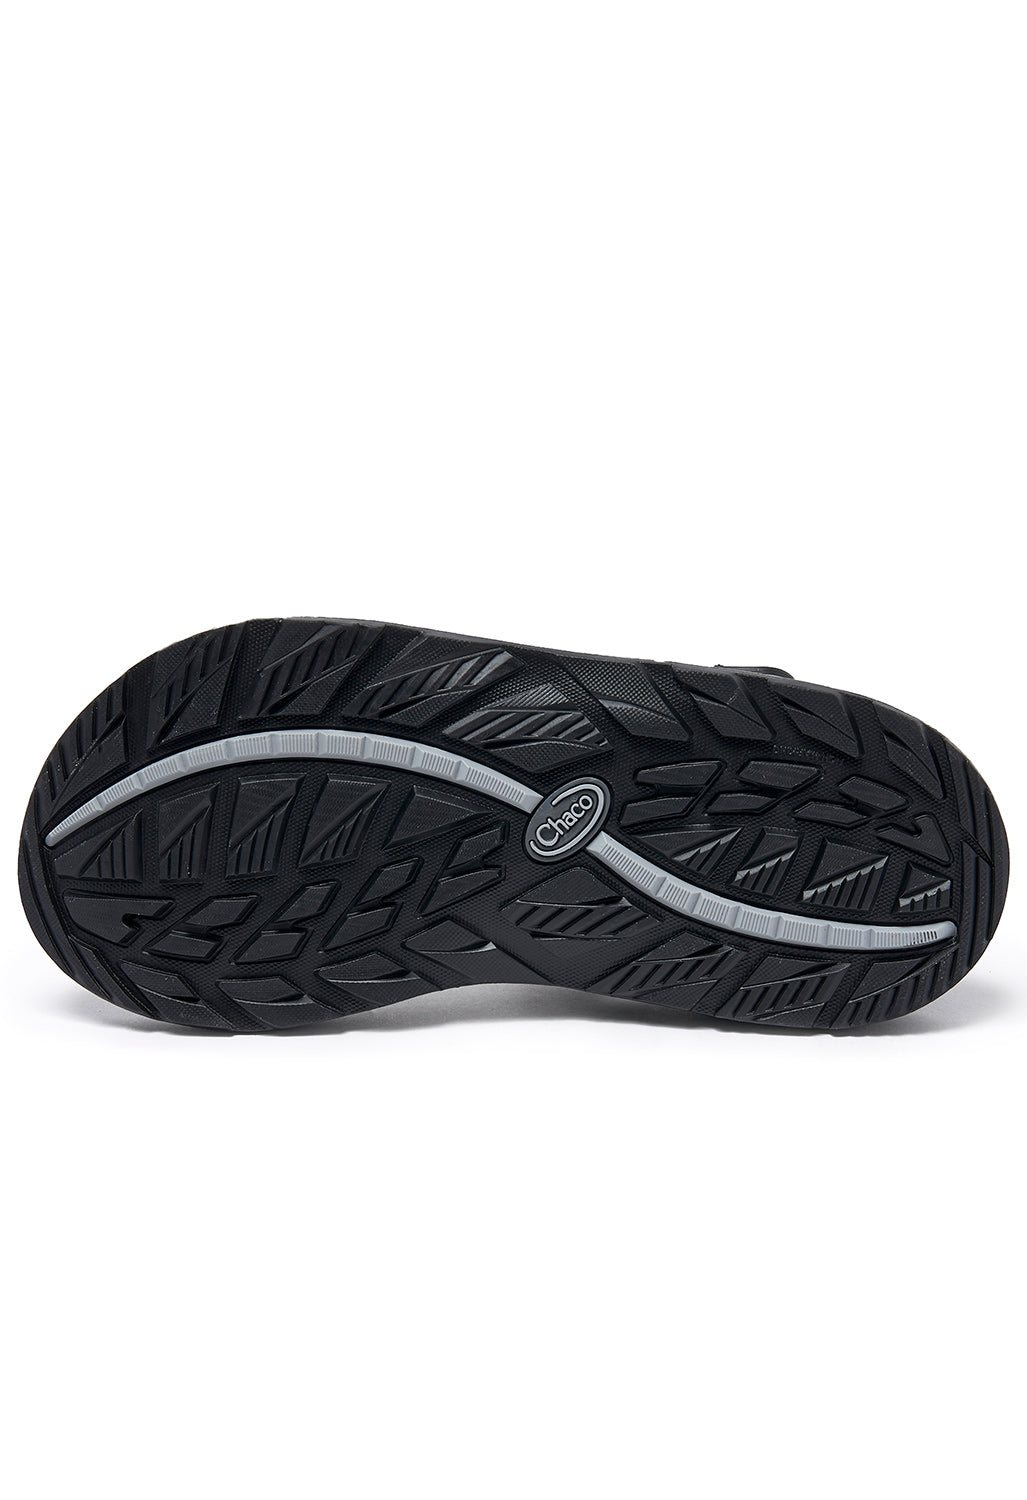 Chaco Men's Z1 Classic Sandals - Split Grey